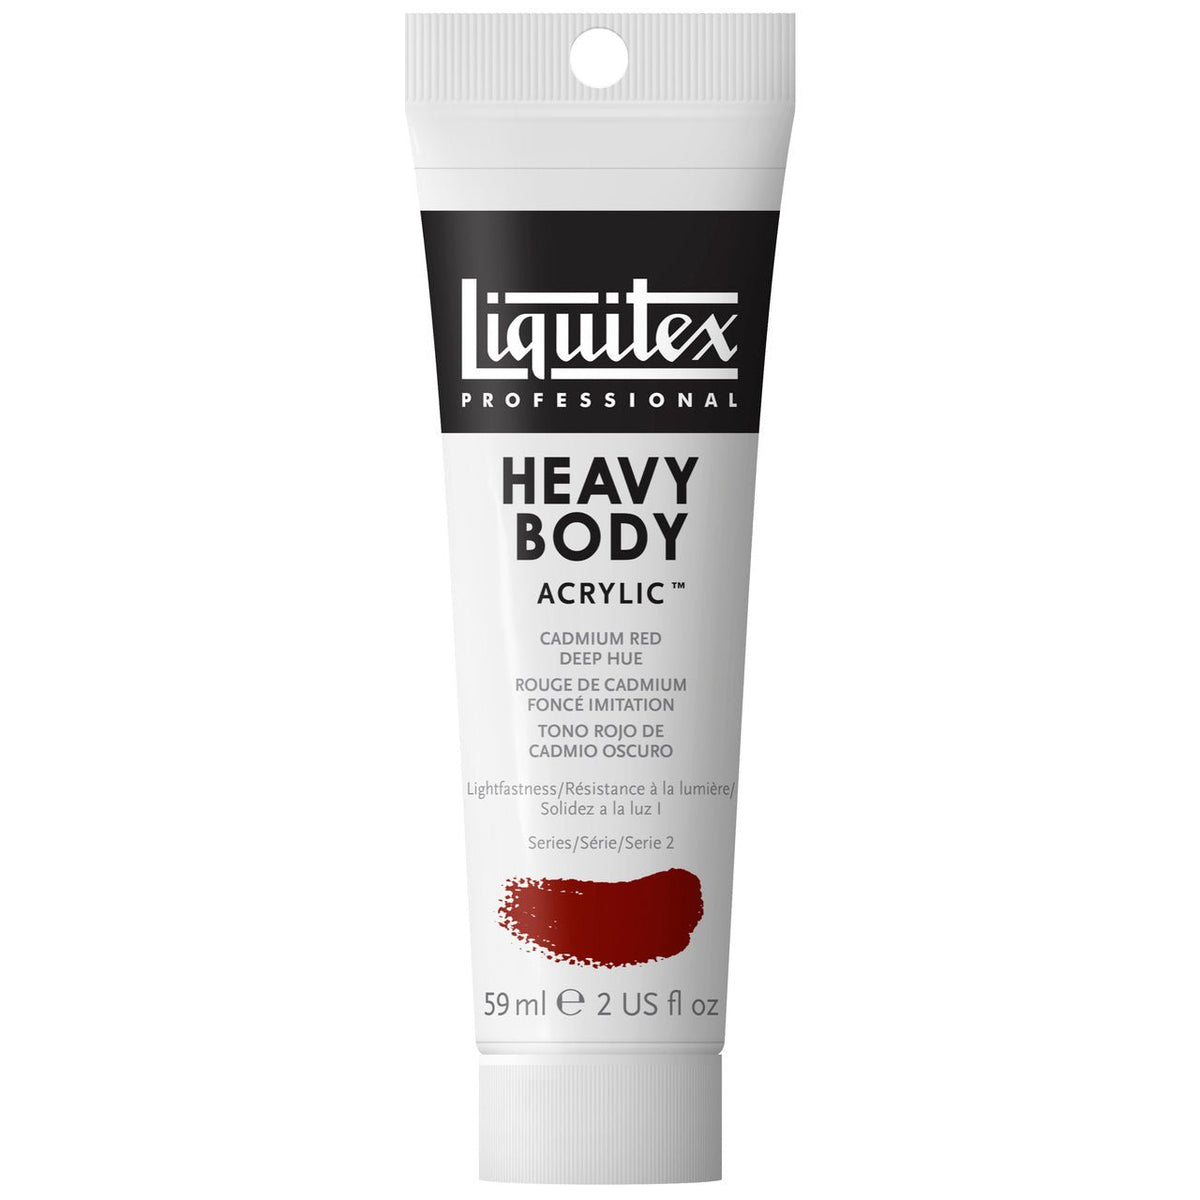 Liquitex Heavy Body Acrylic 2oz - Cadmium red deep hue - merriartist.com